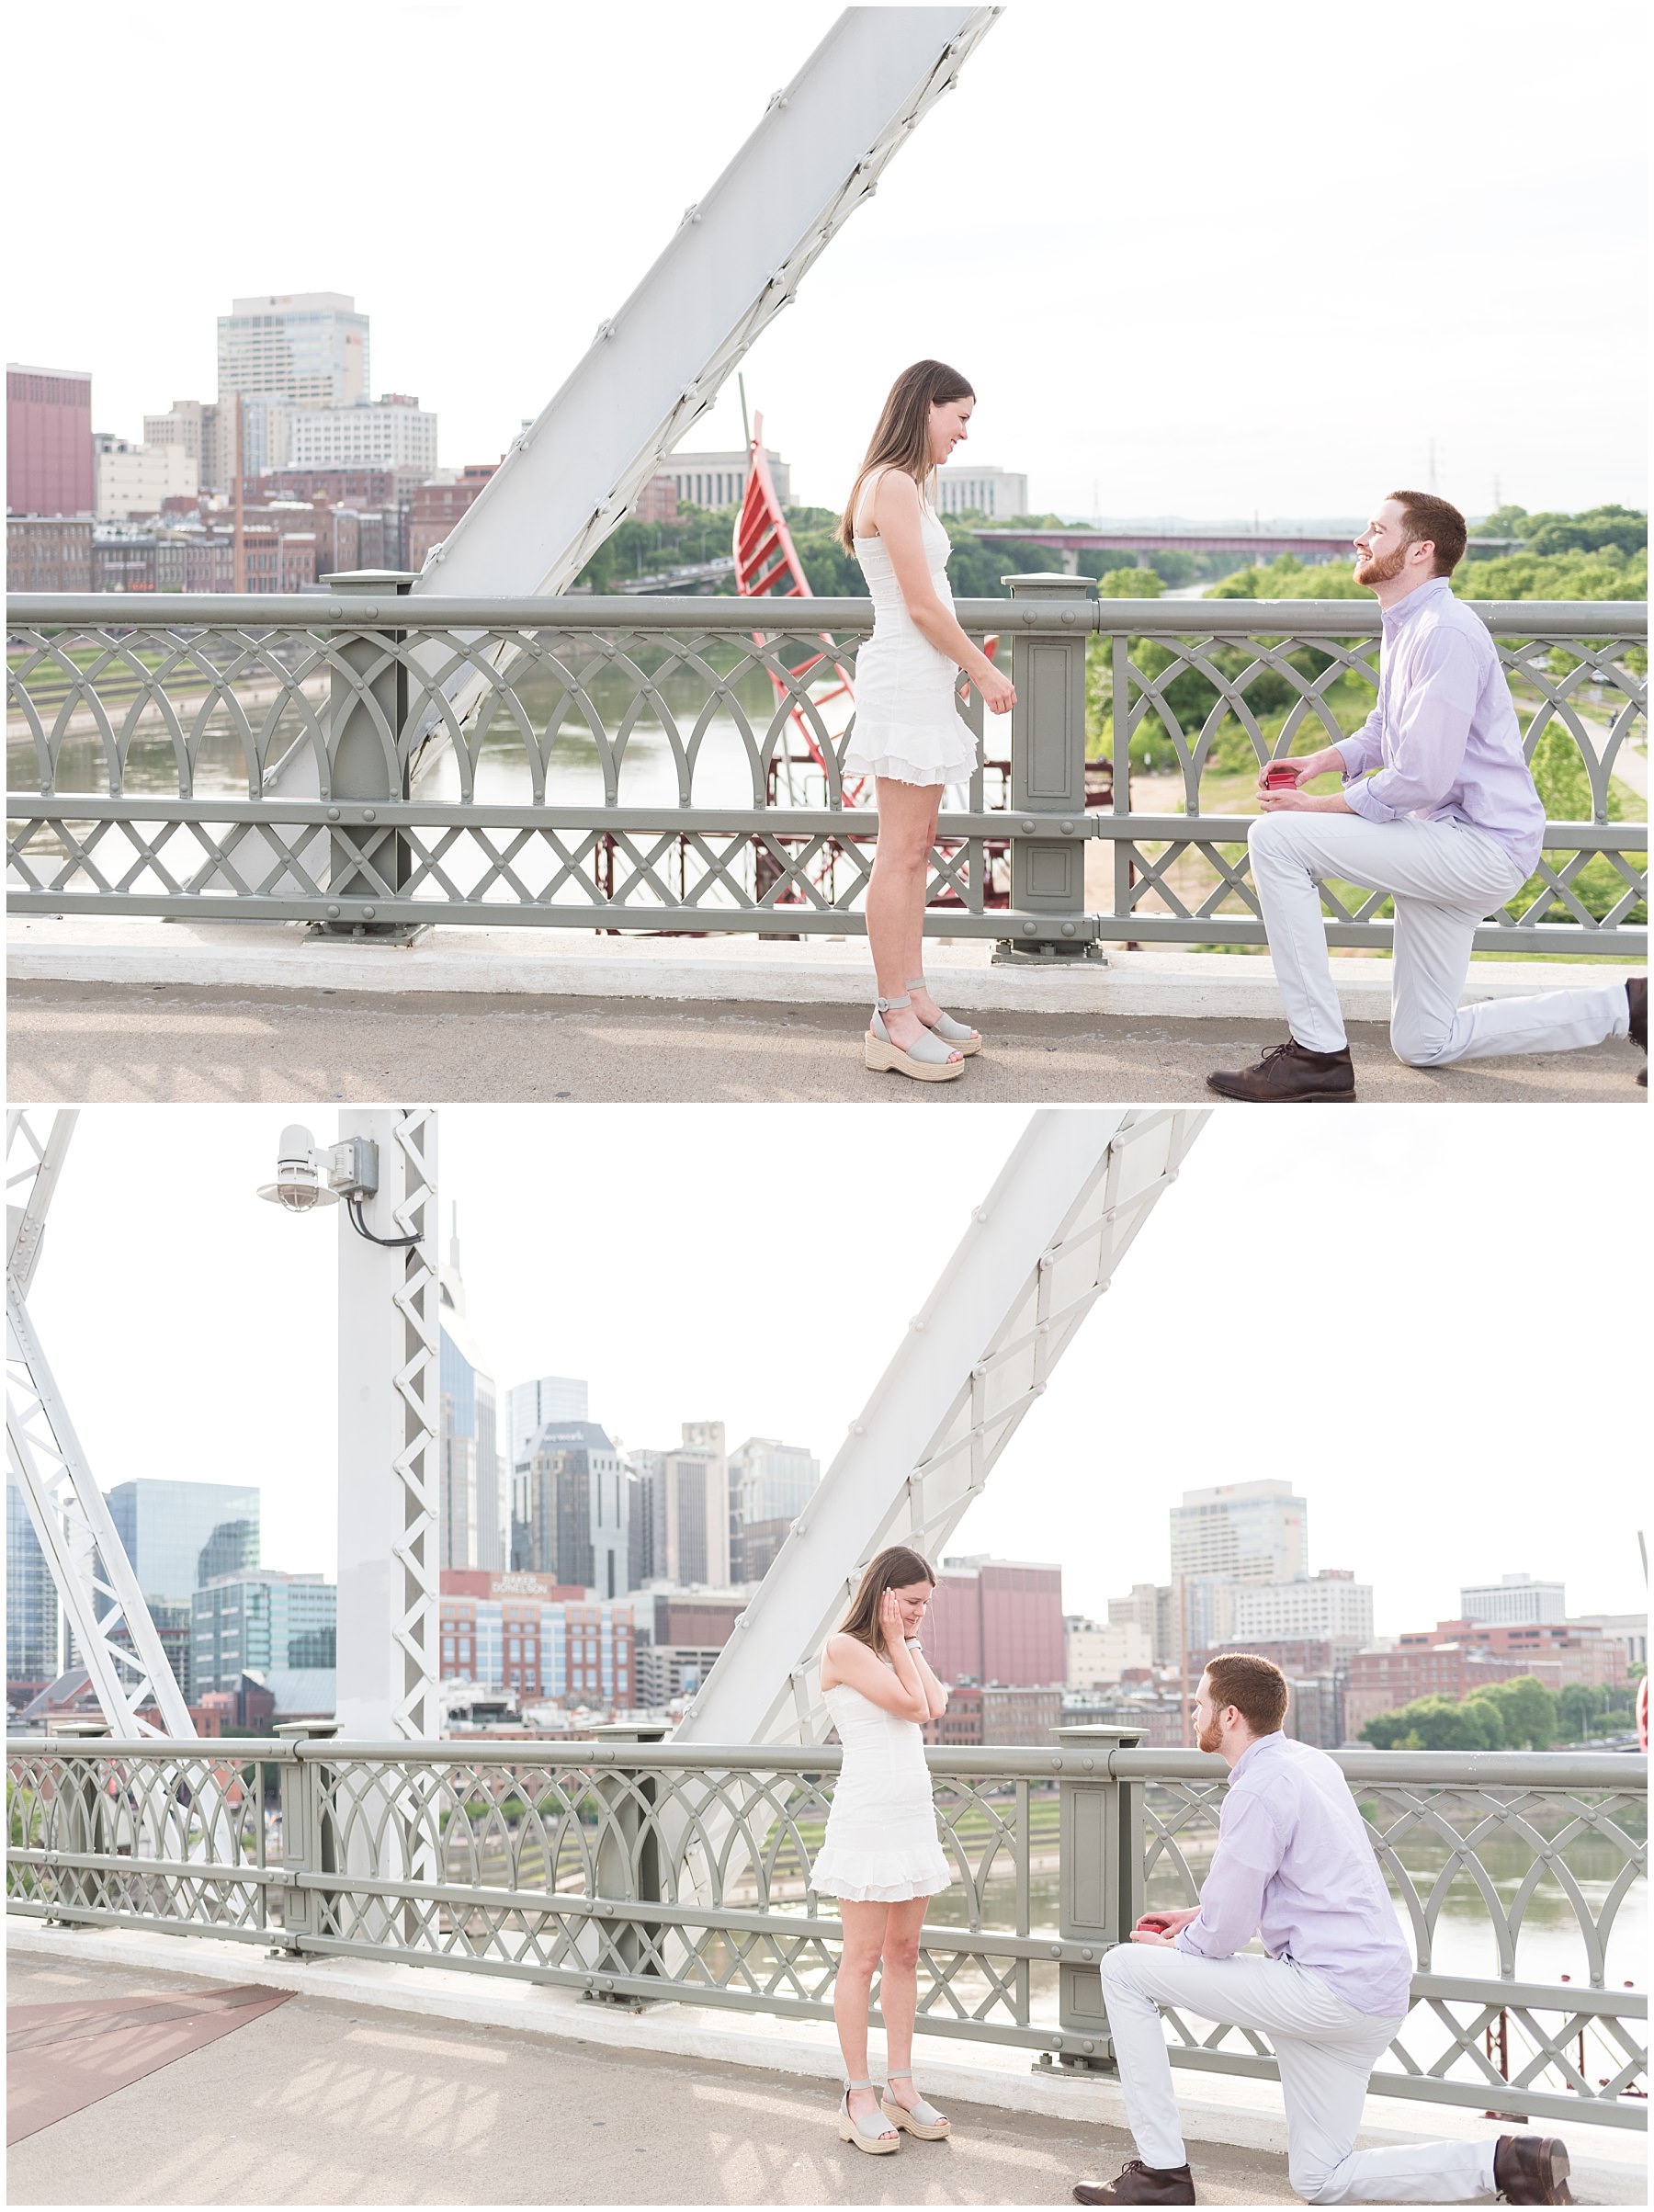 Guy proposing to girlfriend in Downtown Nashville on the Pedestrian Bridge